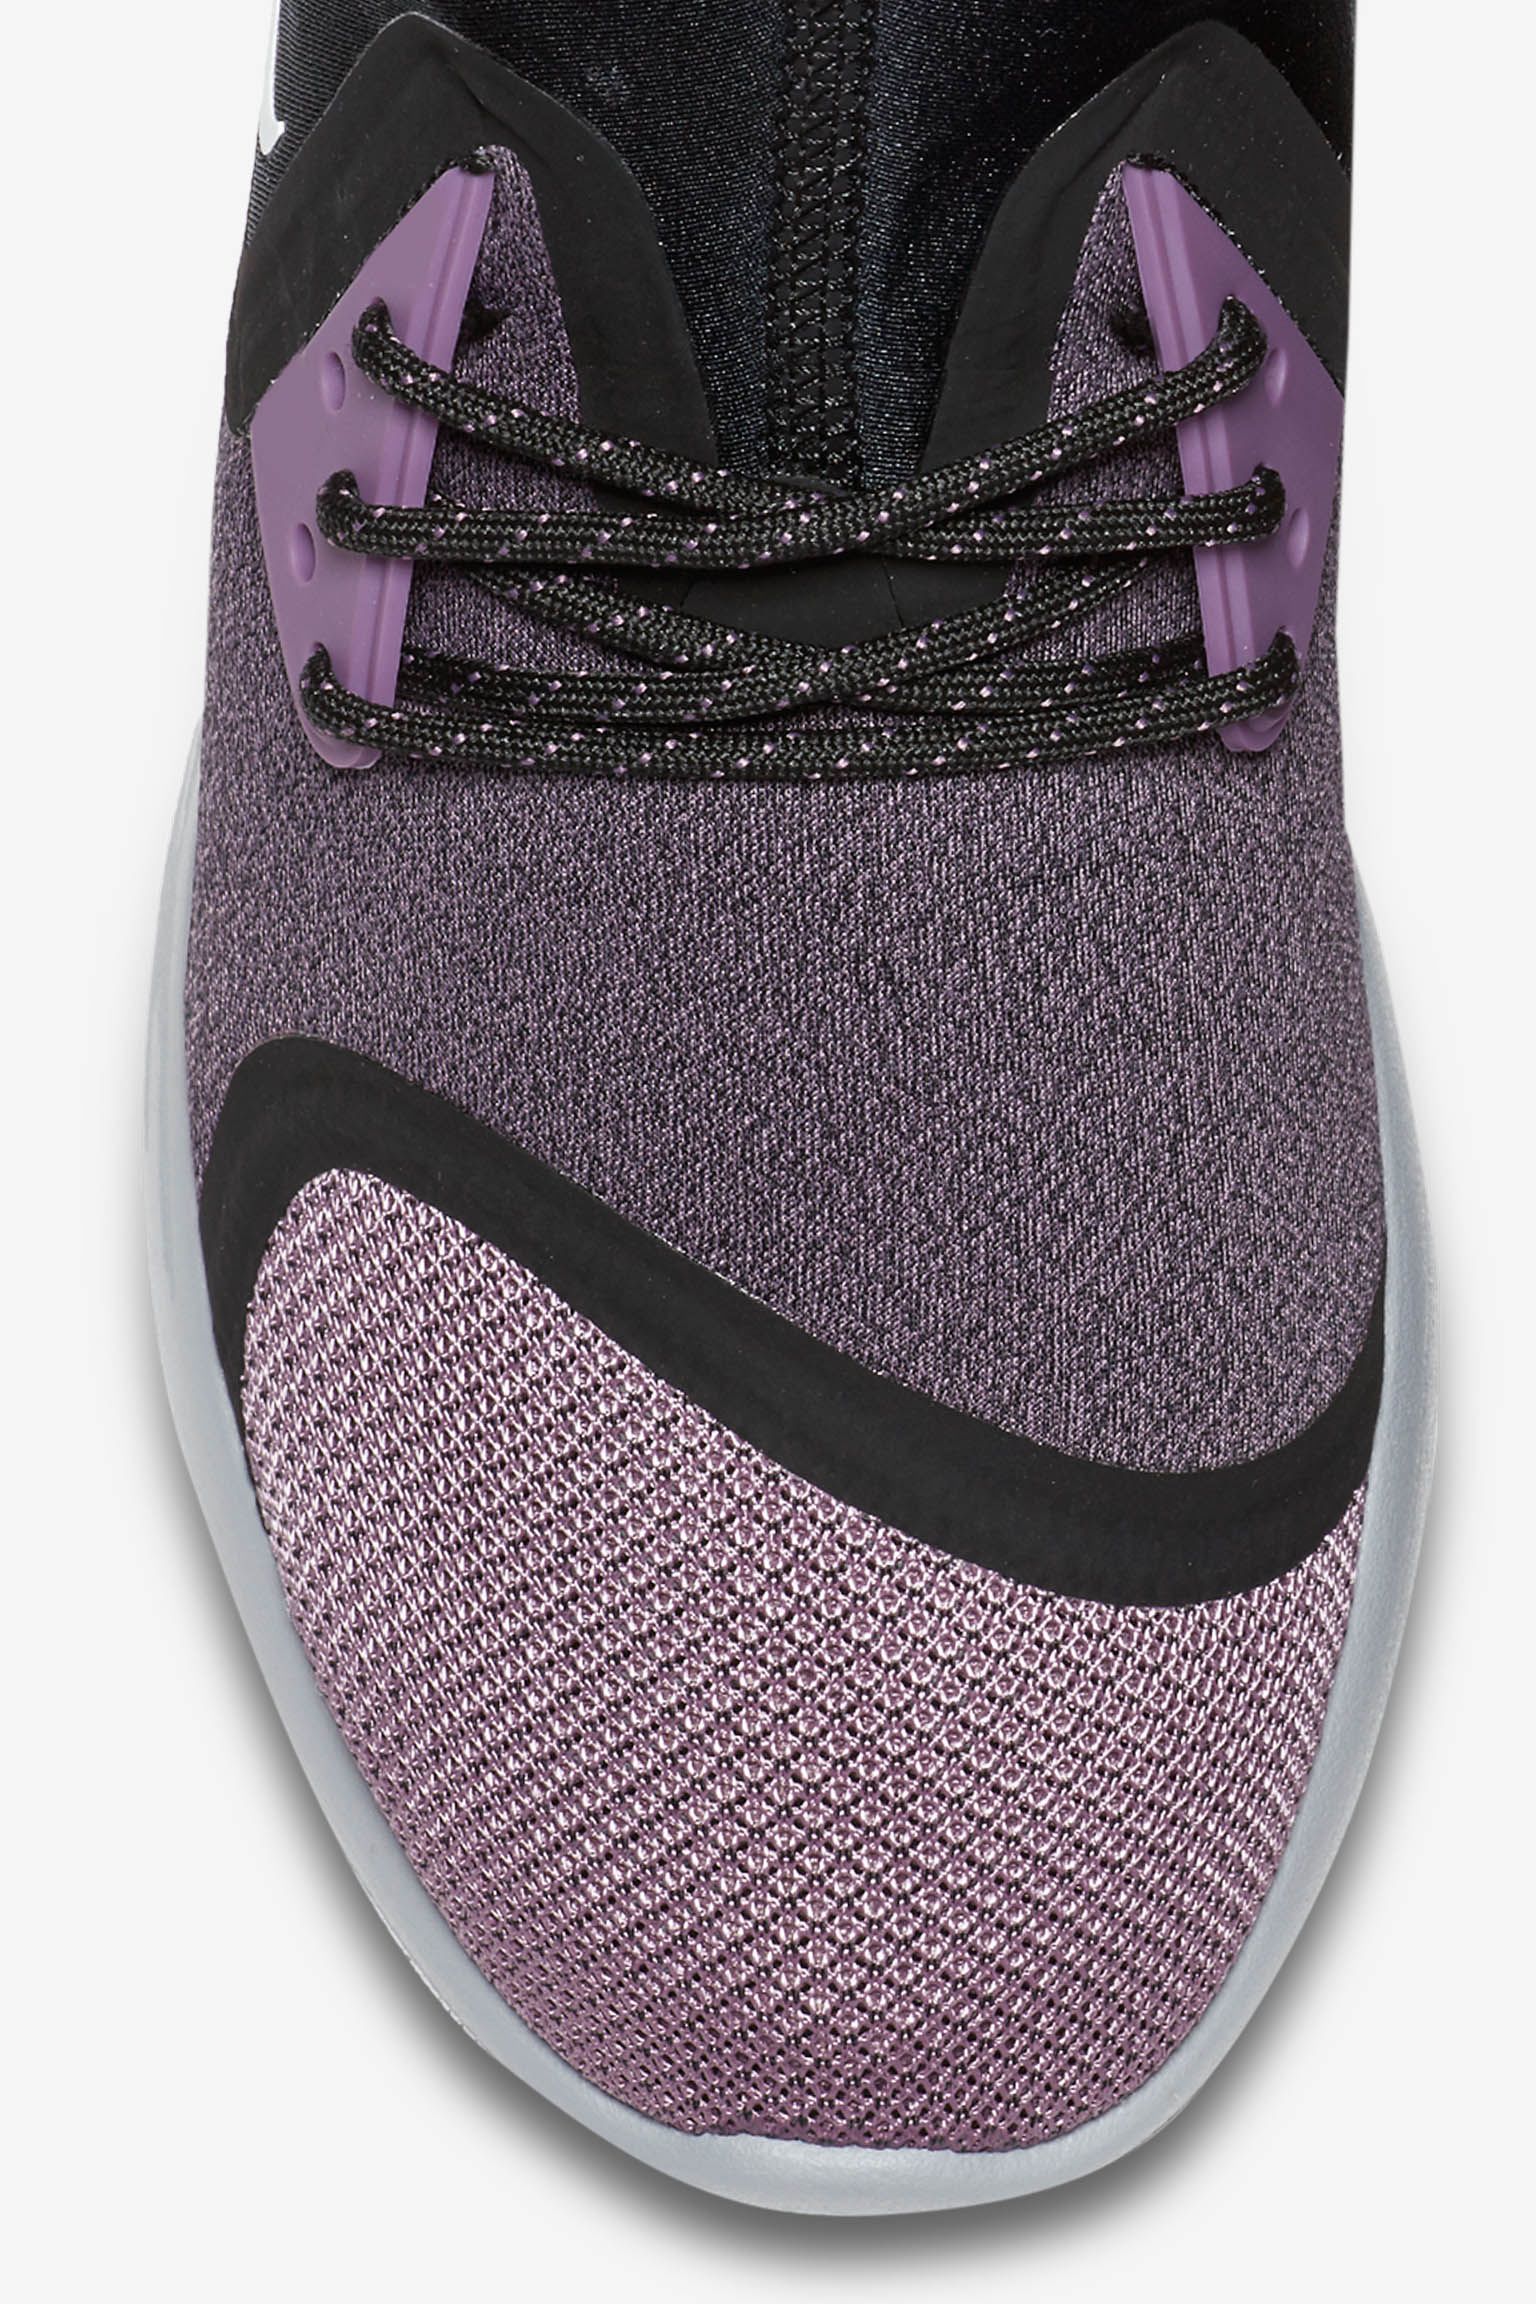 LunarCharge Essential "Violet Dust" para mujer. Nike SNKRS ES